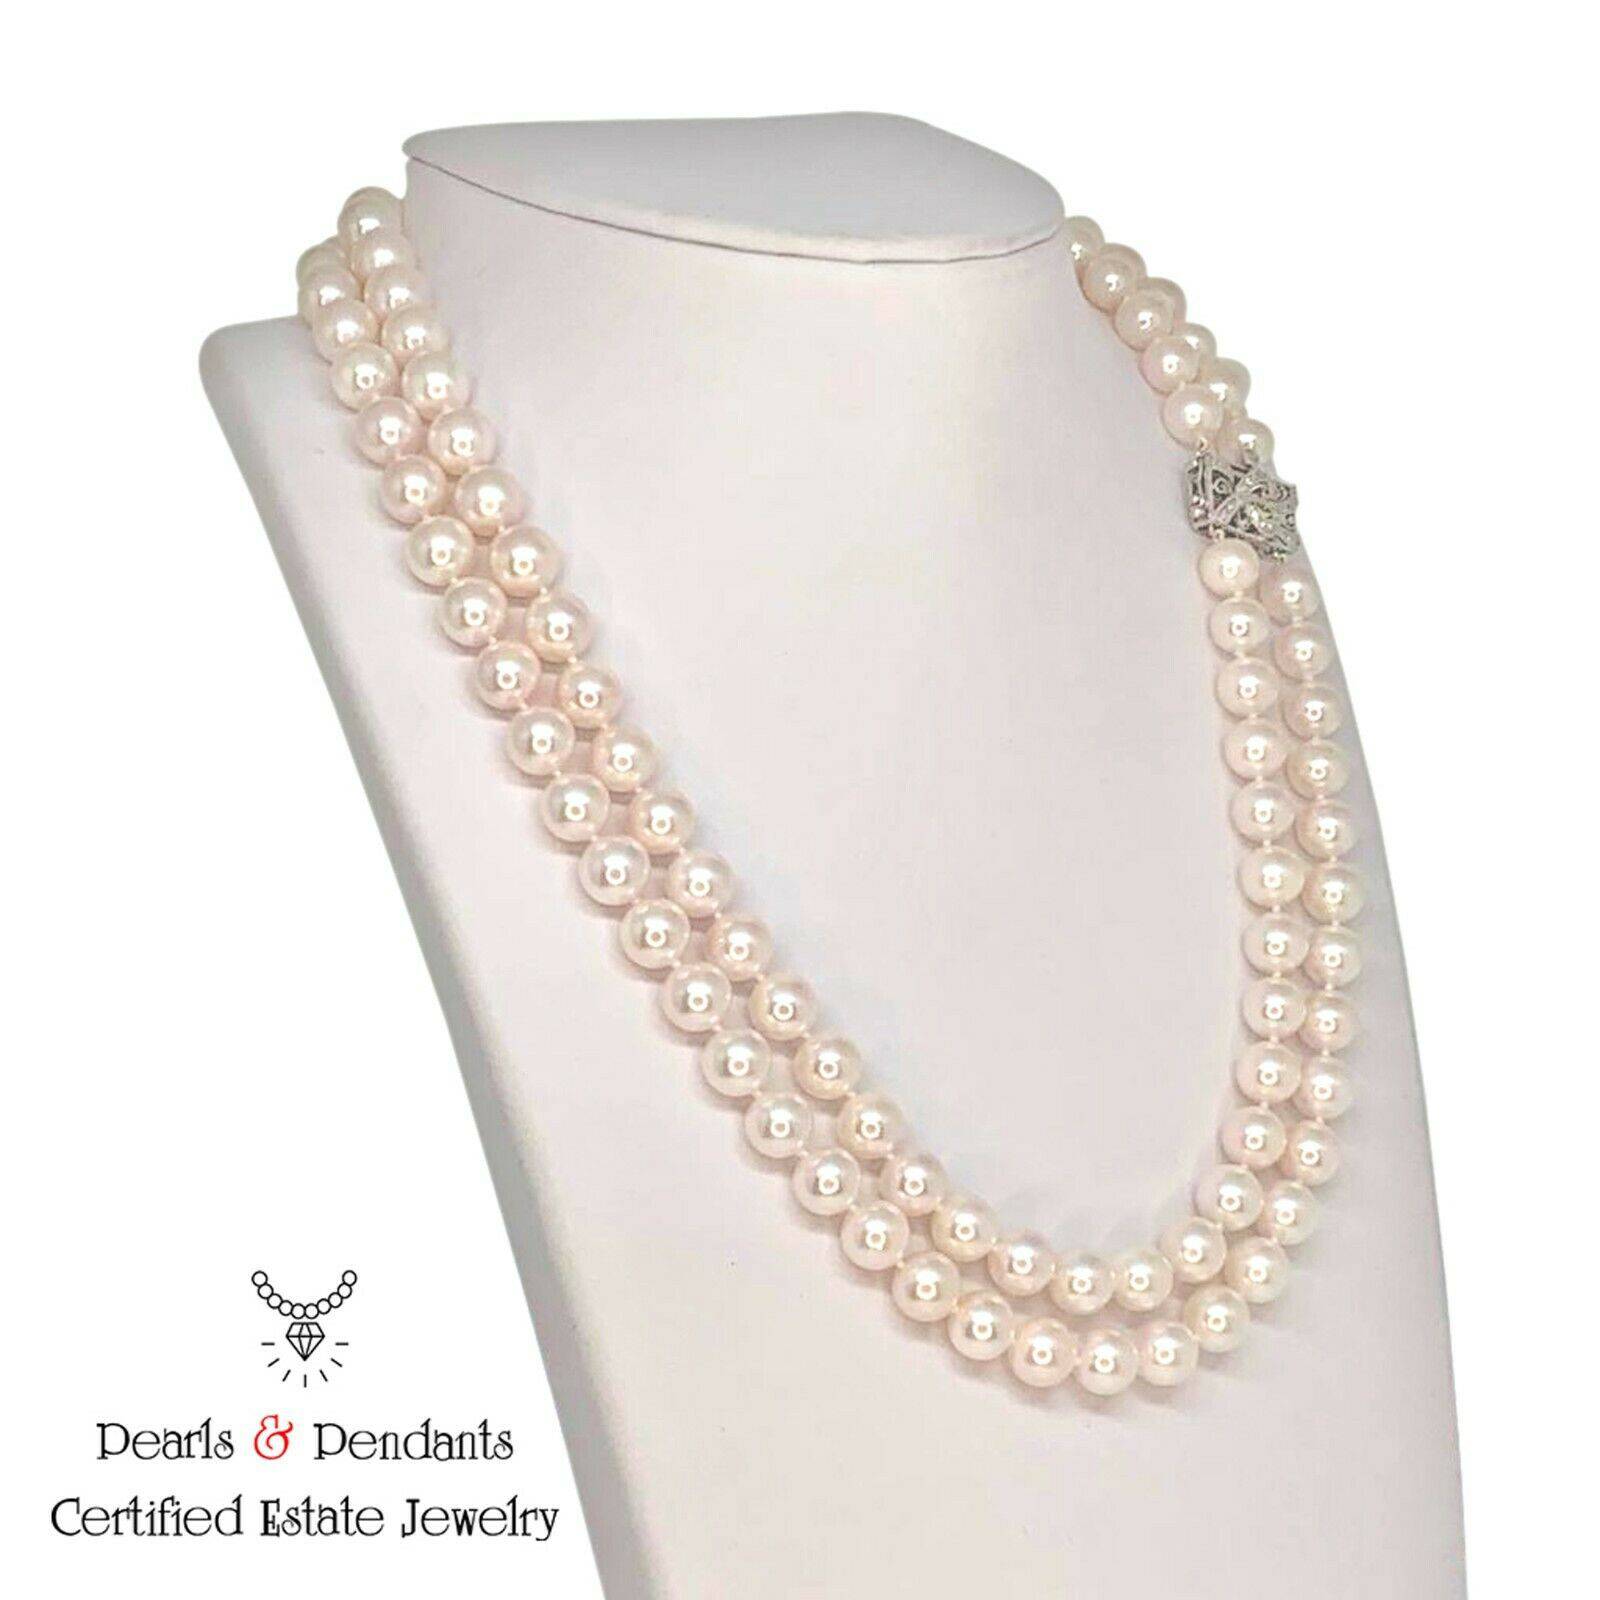 Diamond Akoya Pearl Necklace 8.20 mm 14k Gold 19" 2-Strand Certified $11,950 010260 - Certified Fine Jewelry